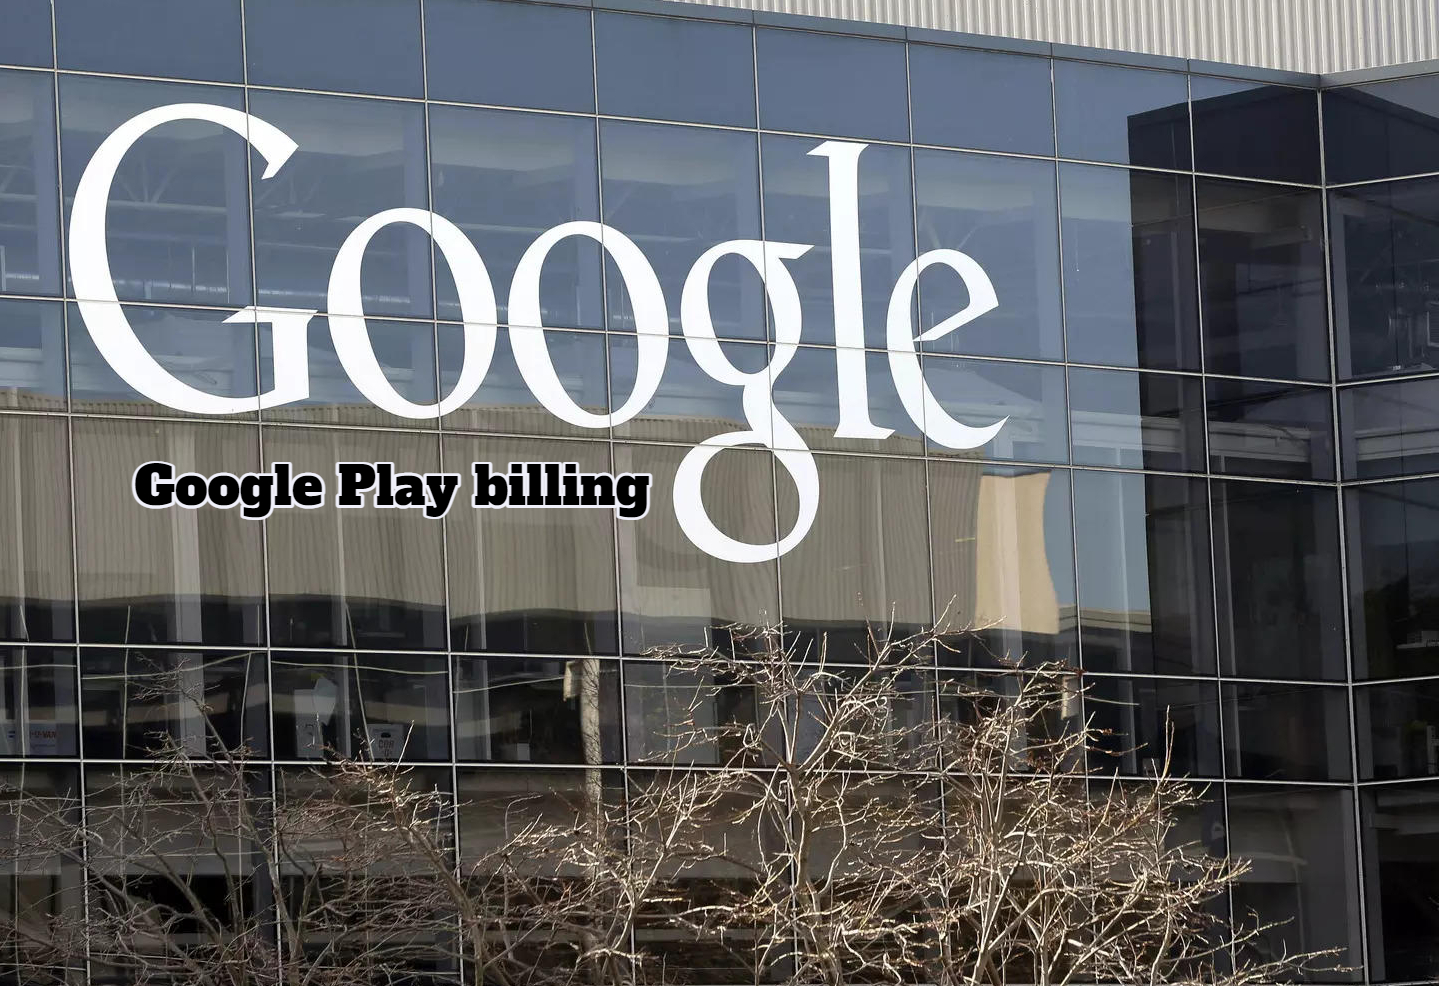 Google Play billing